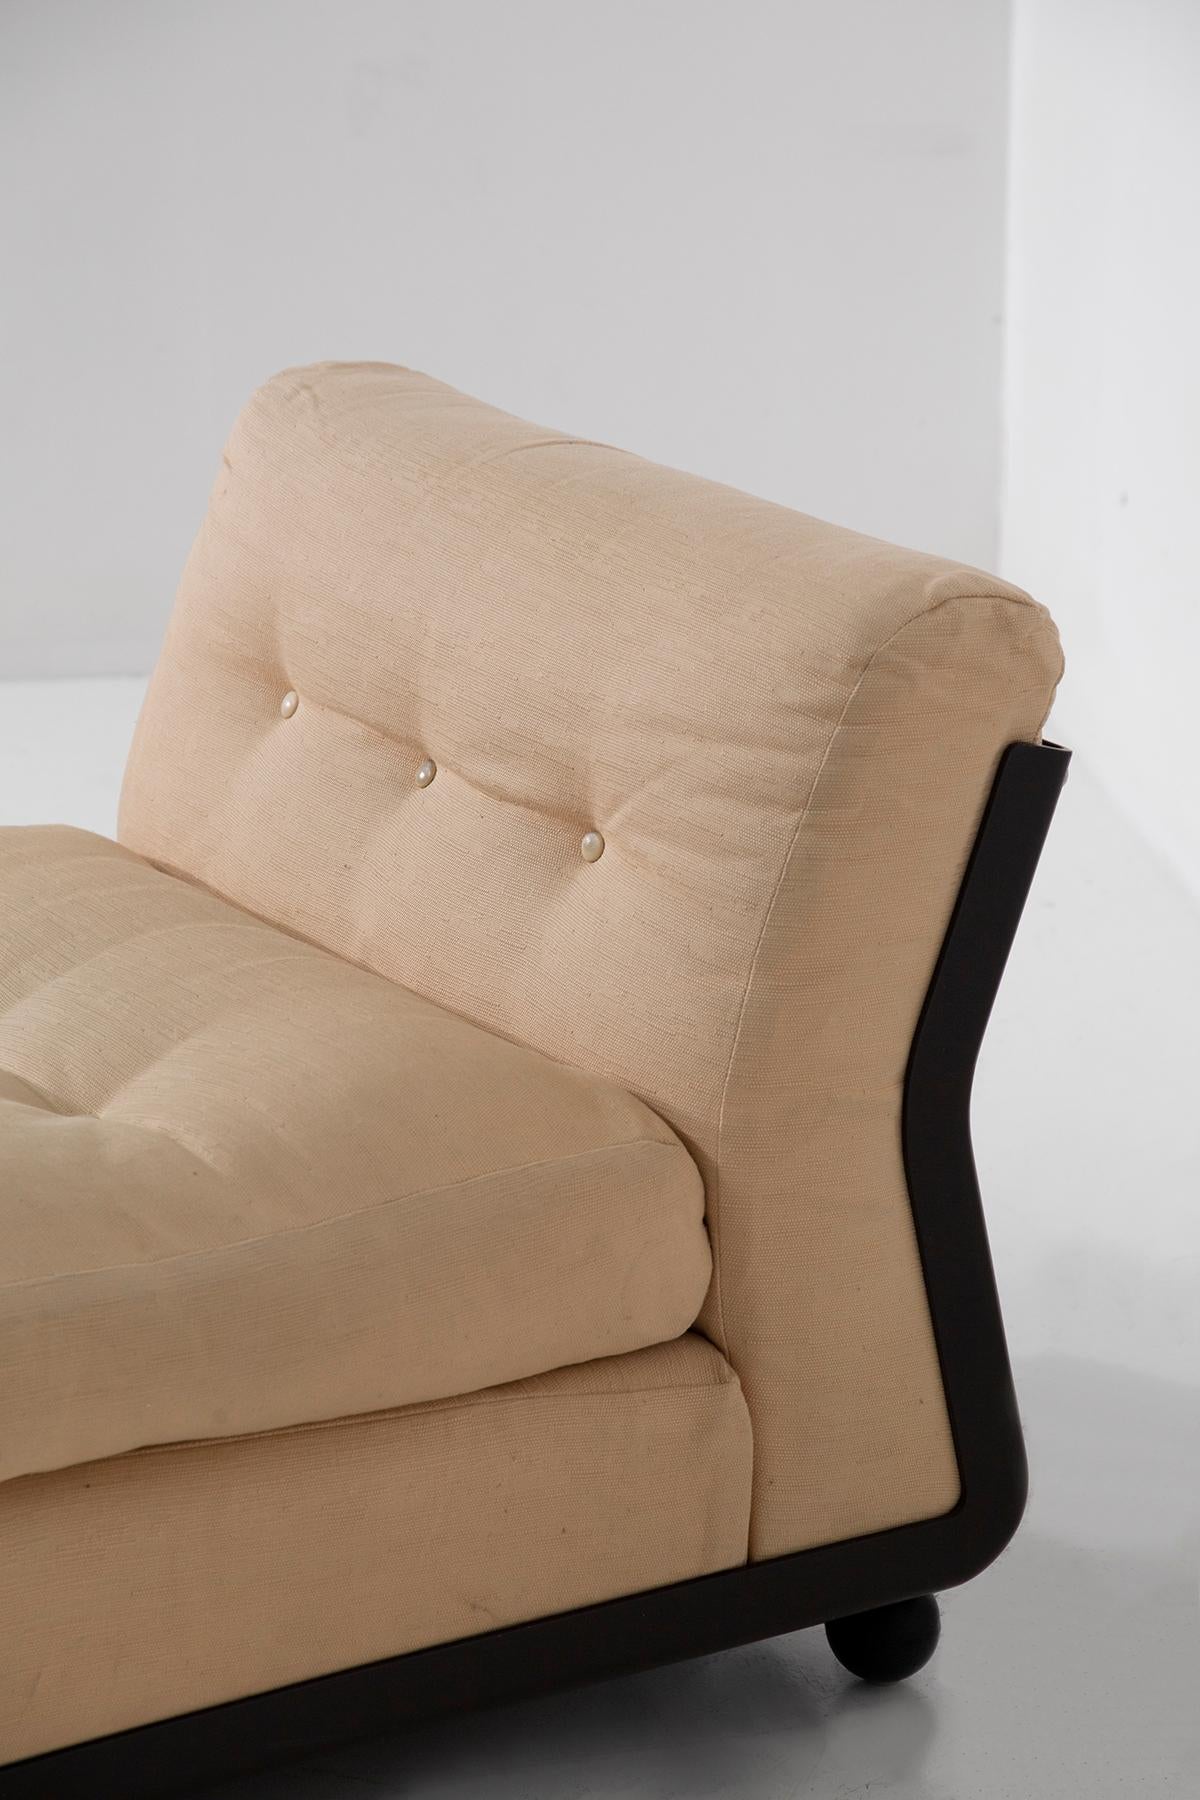 Pair of Amanta Mario Bellini armchairs, original fabric, label In Good Condition For Sale In Milano, IT